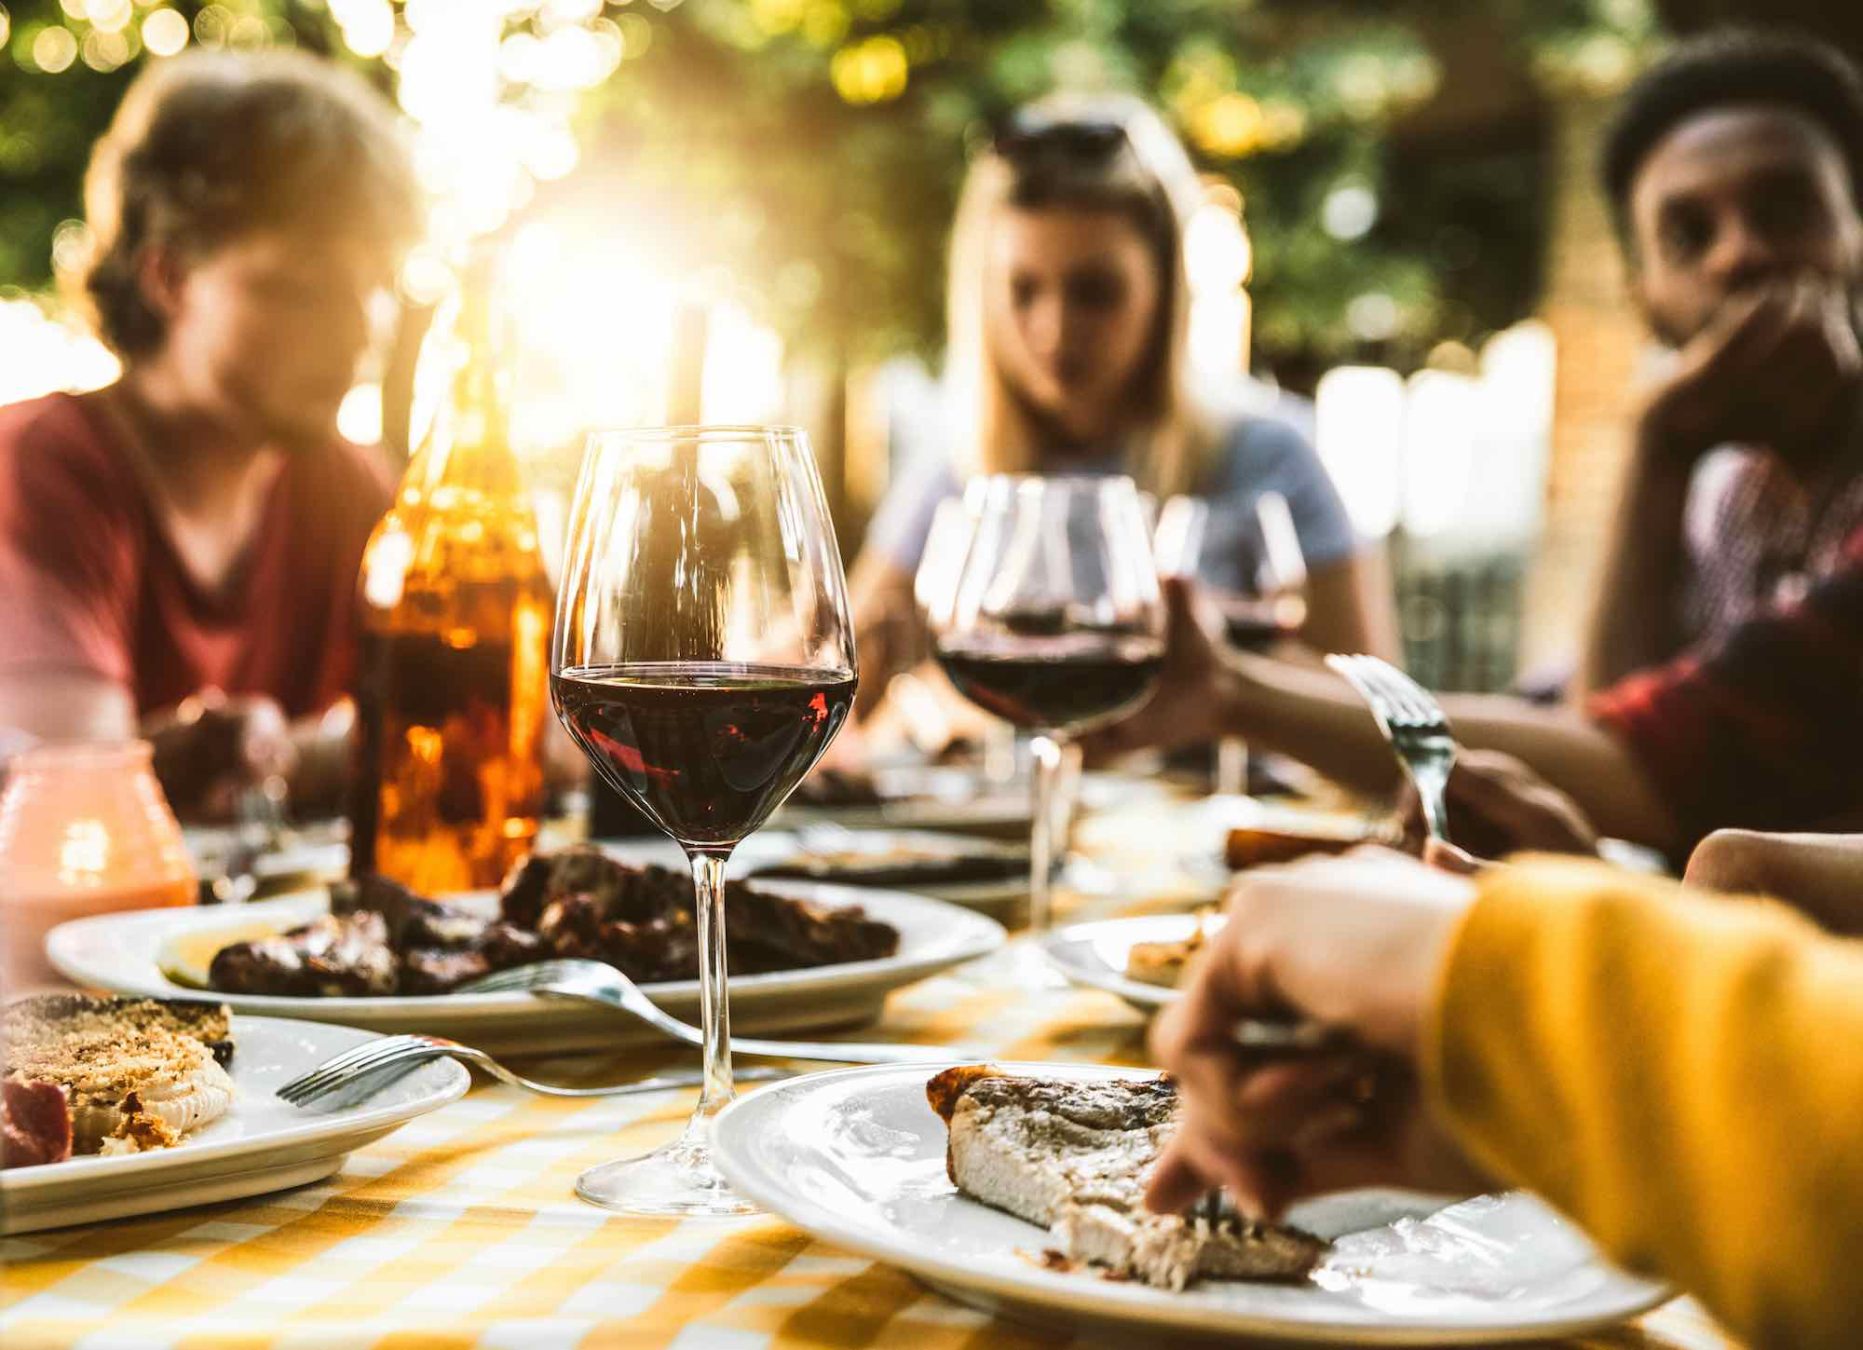 Gruppo di amici mangia in uno dei tanti ristoranti di carne in Toscana